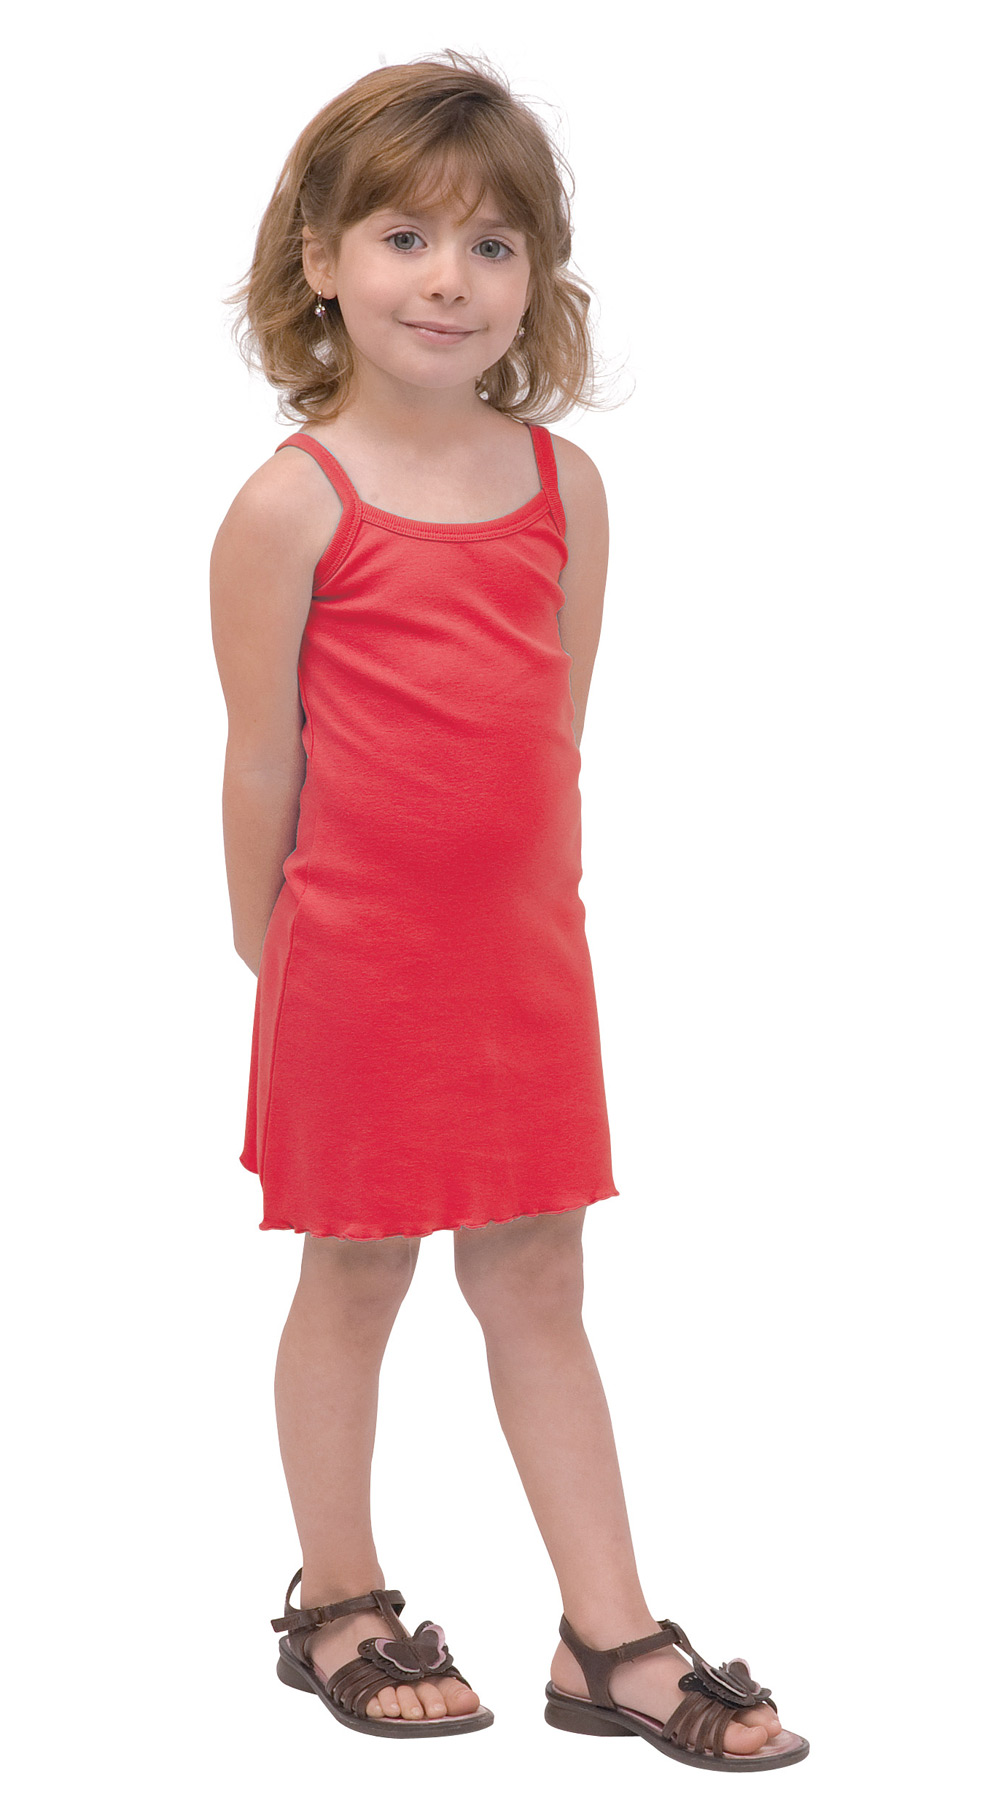 Monag 402160 - Baby Rib Spaghetti Strap Dress